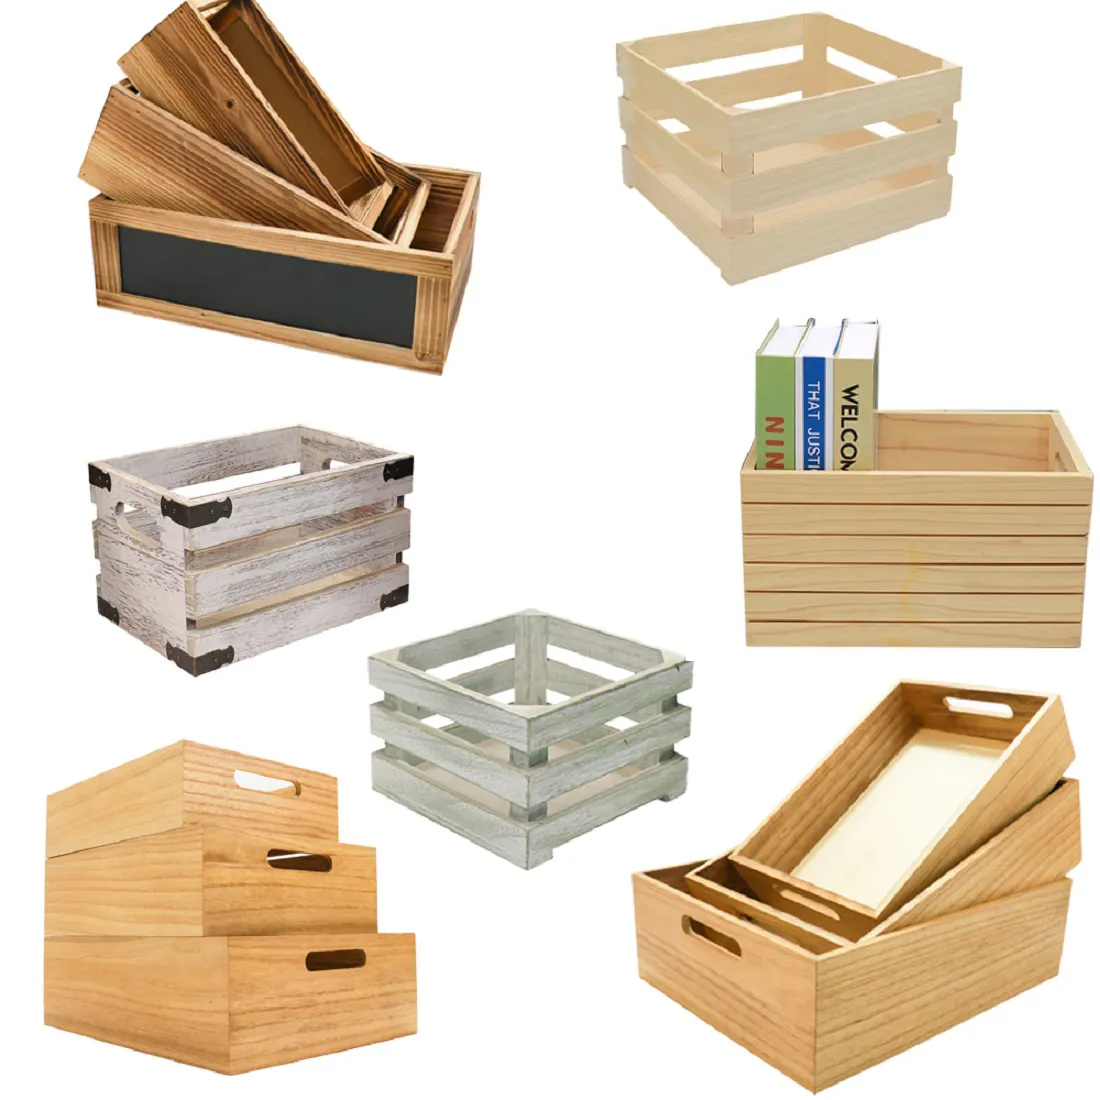 Solid wood storage box wooden crates rustic supermarket display decorative box